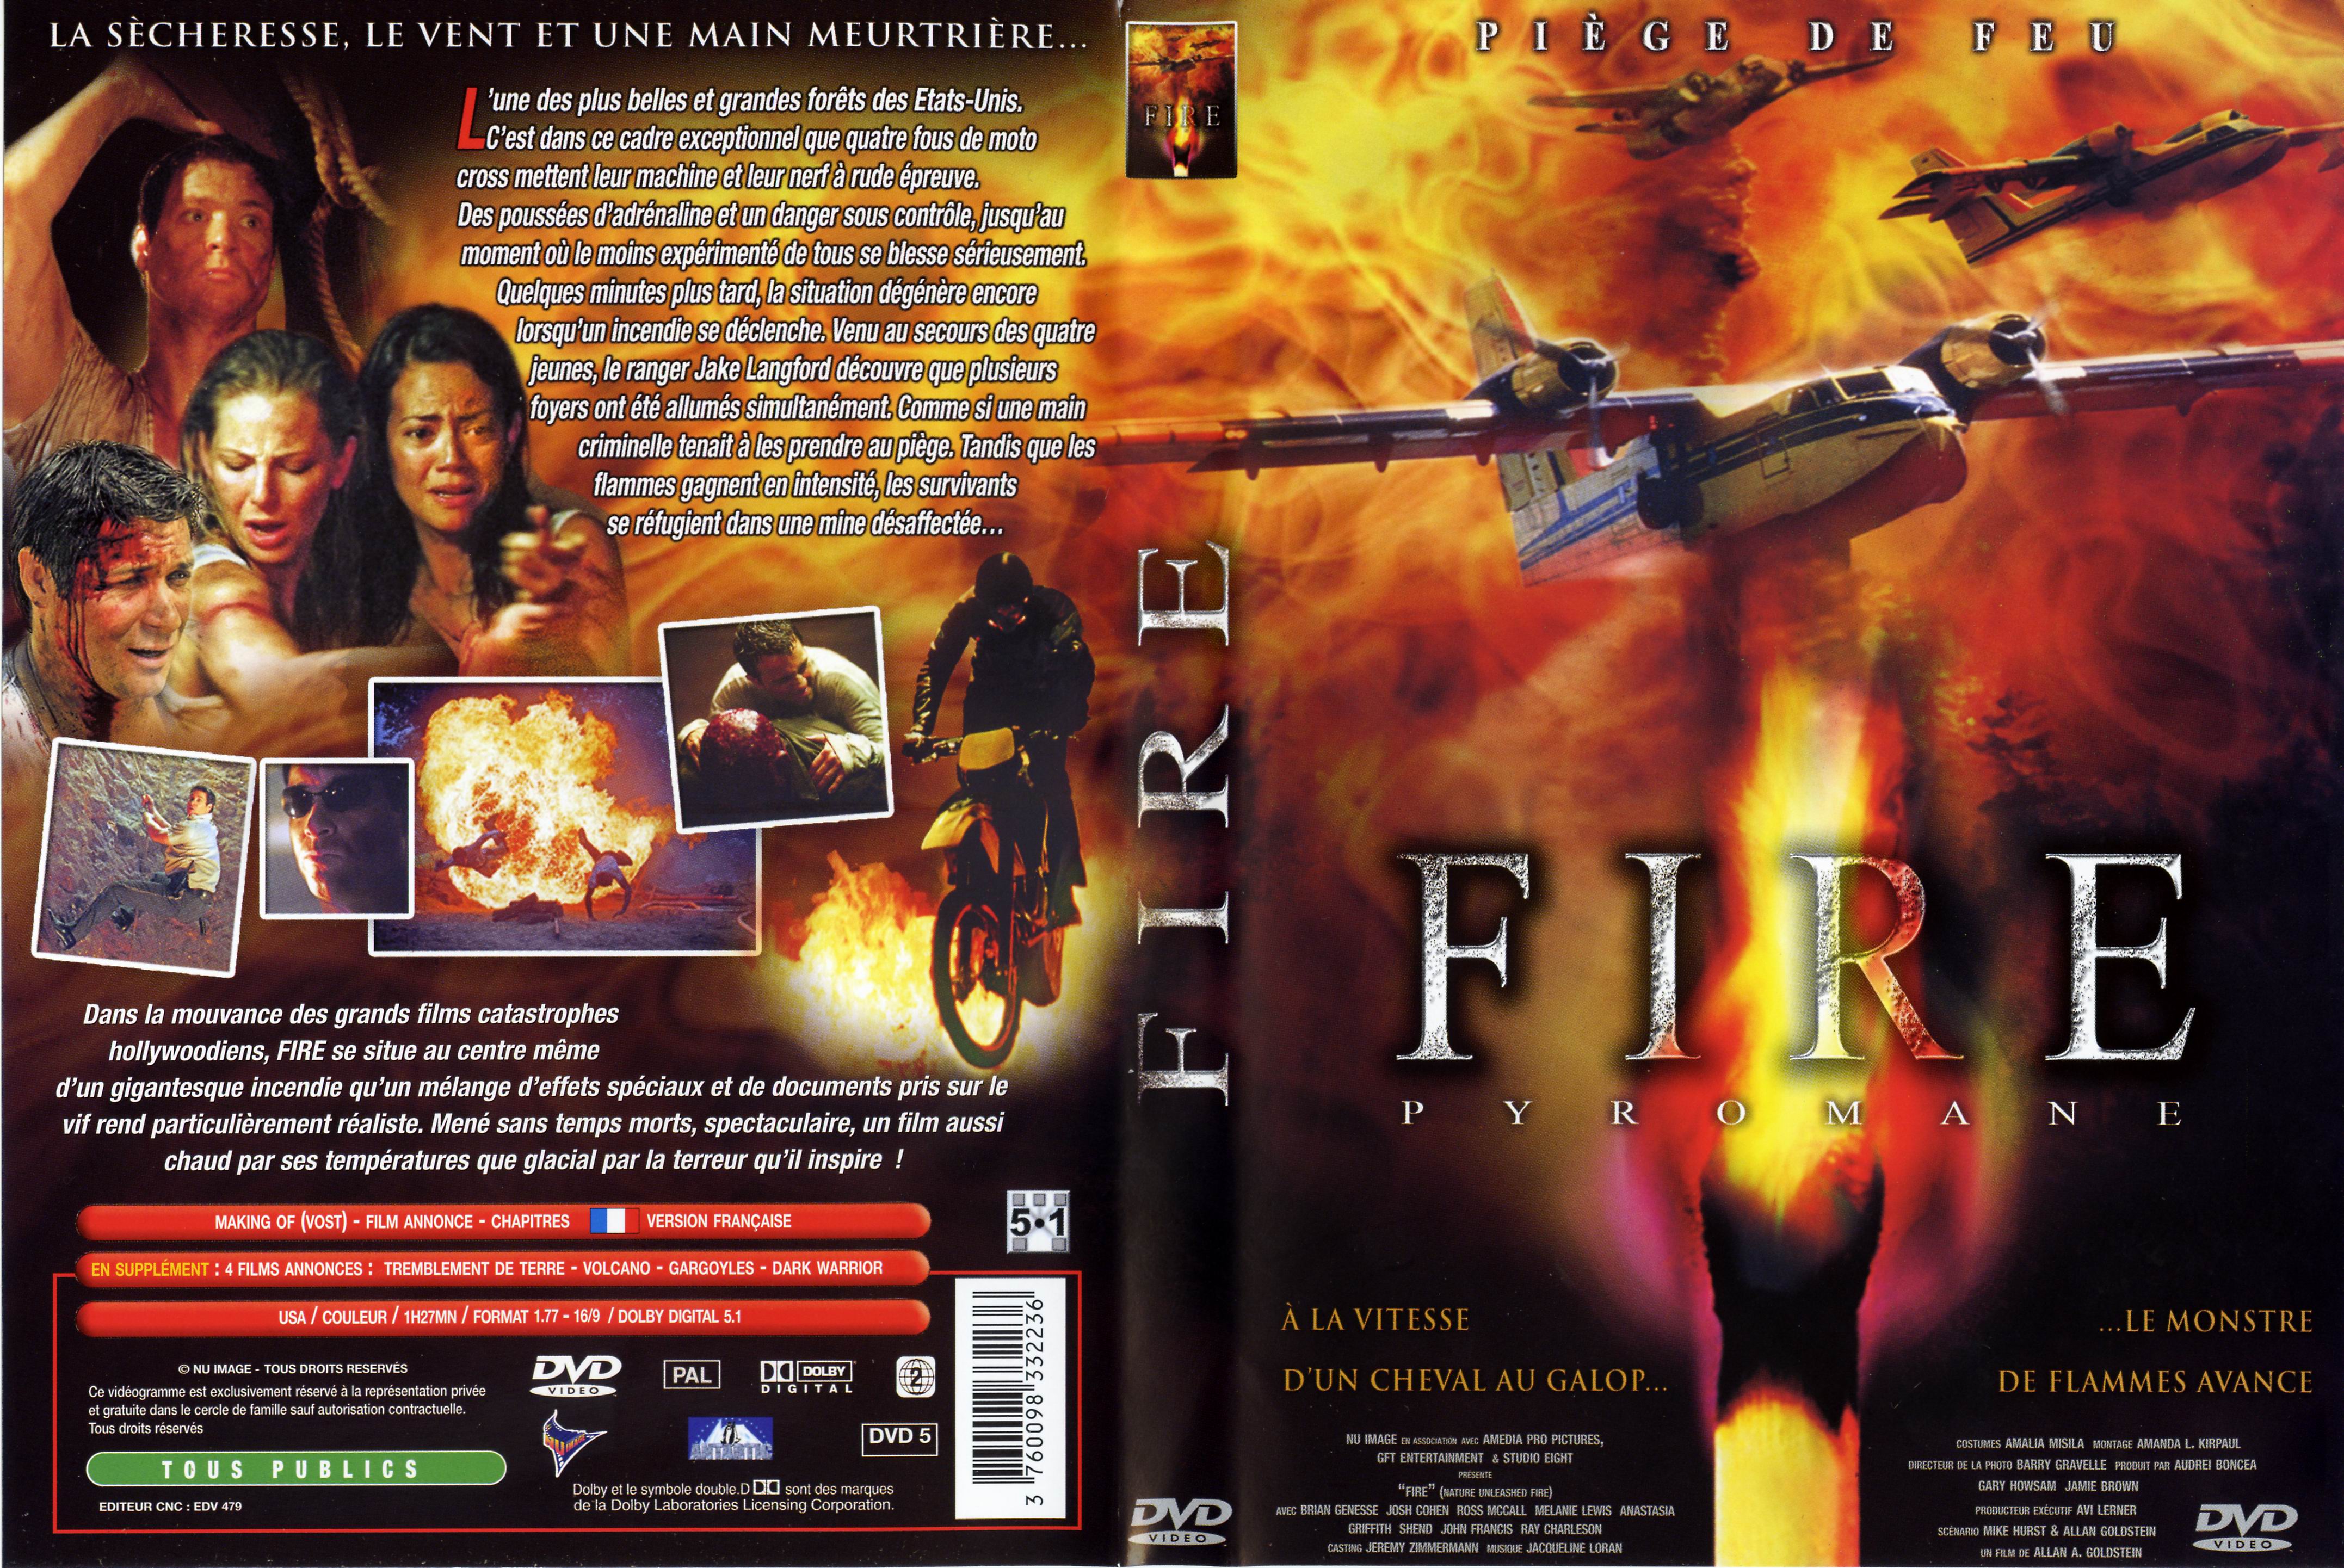 Jaquette DVD Fire